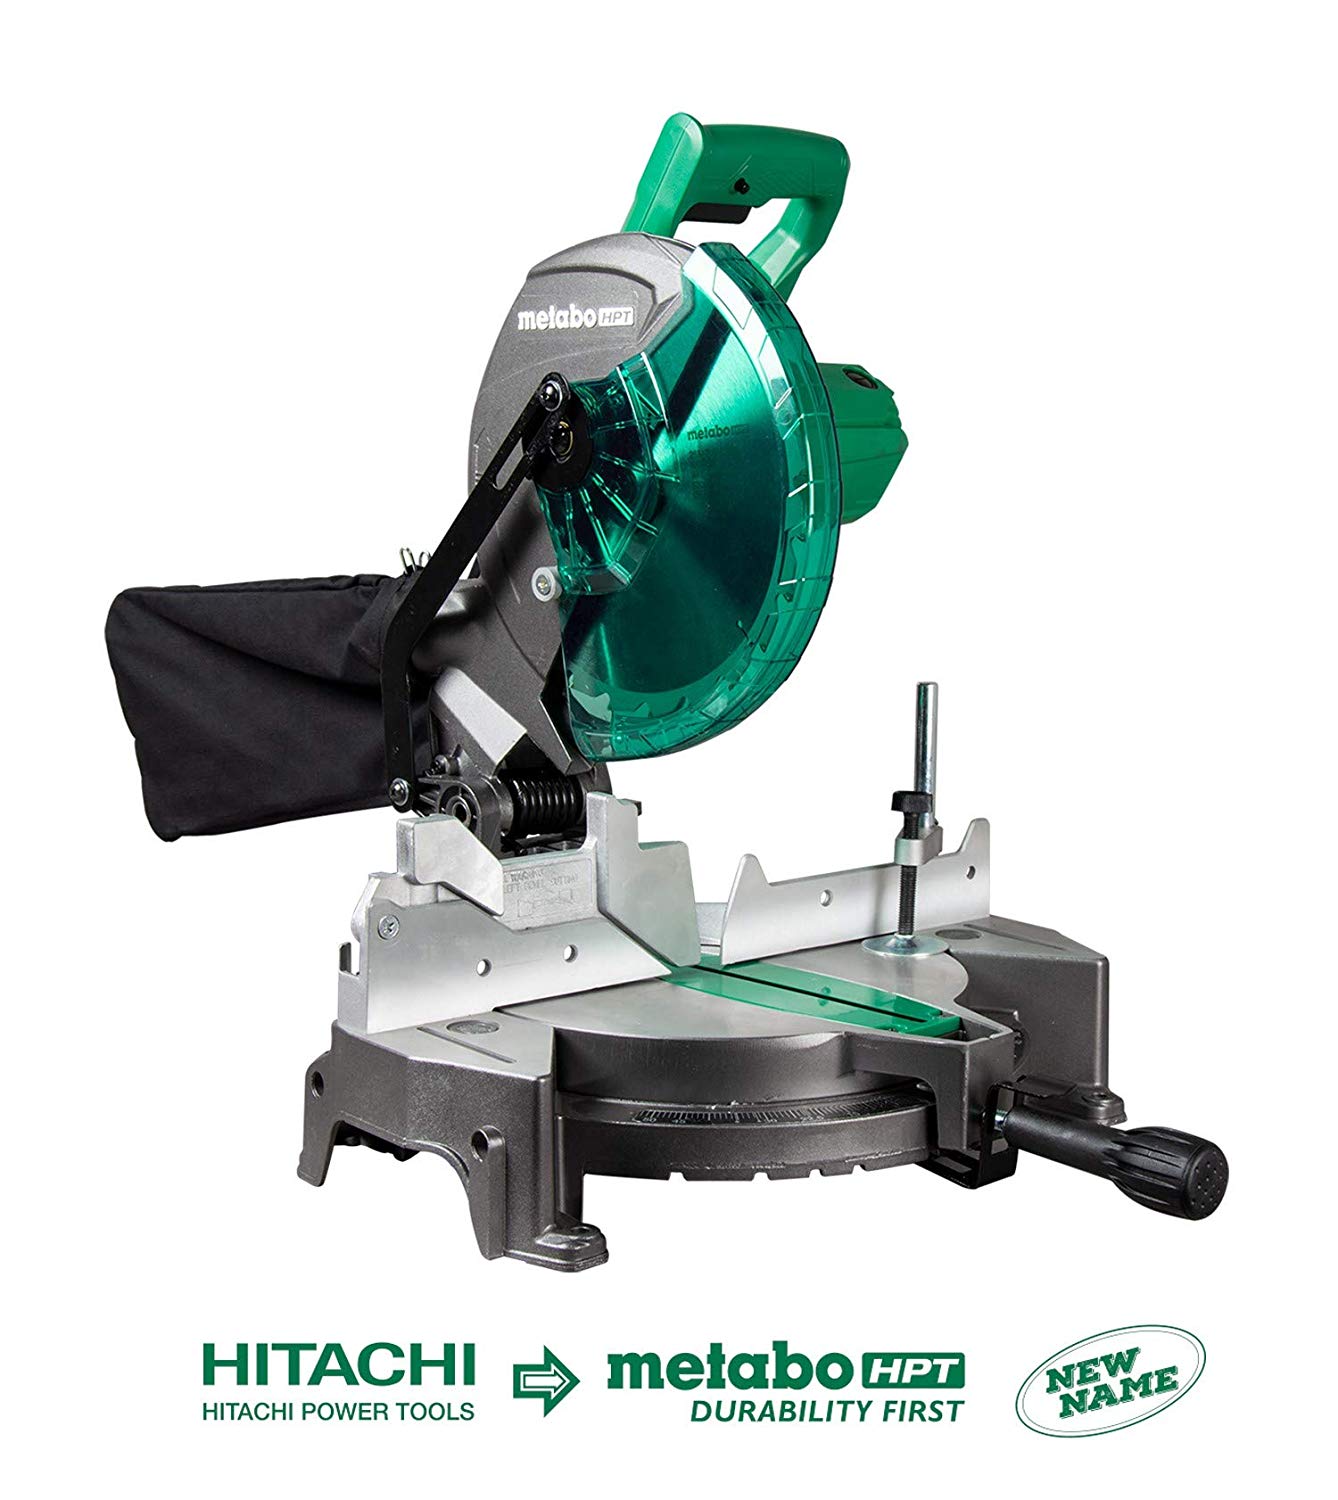 Buy The Same Hitachi Miter Saw